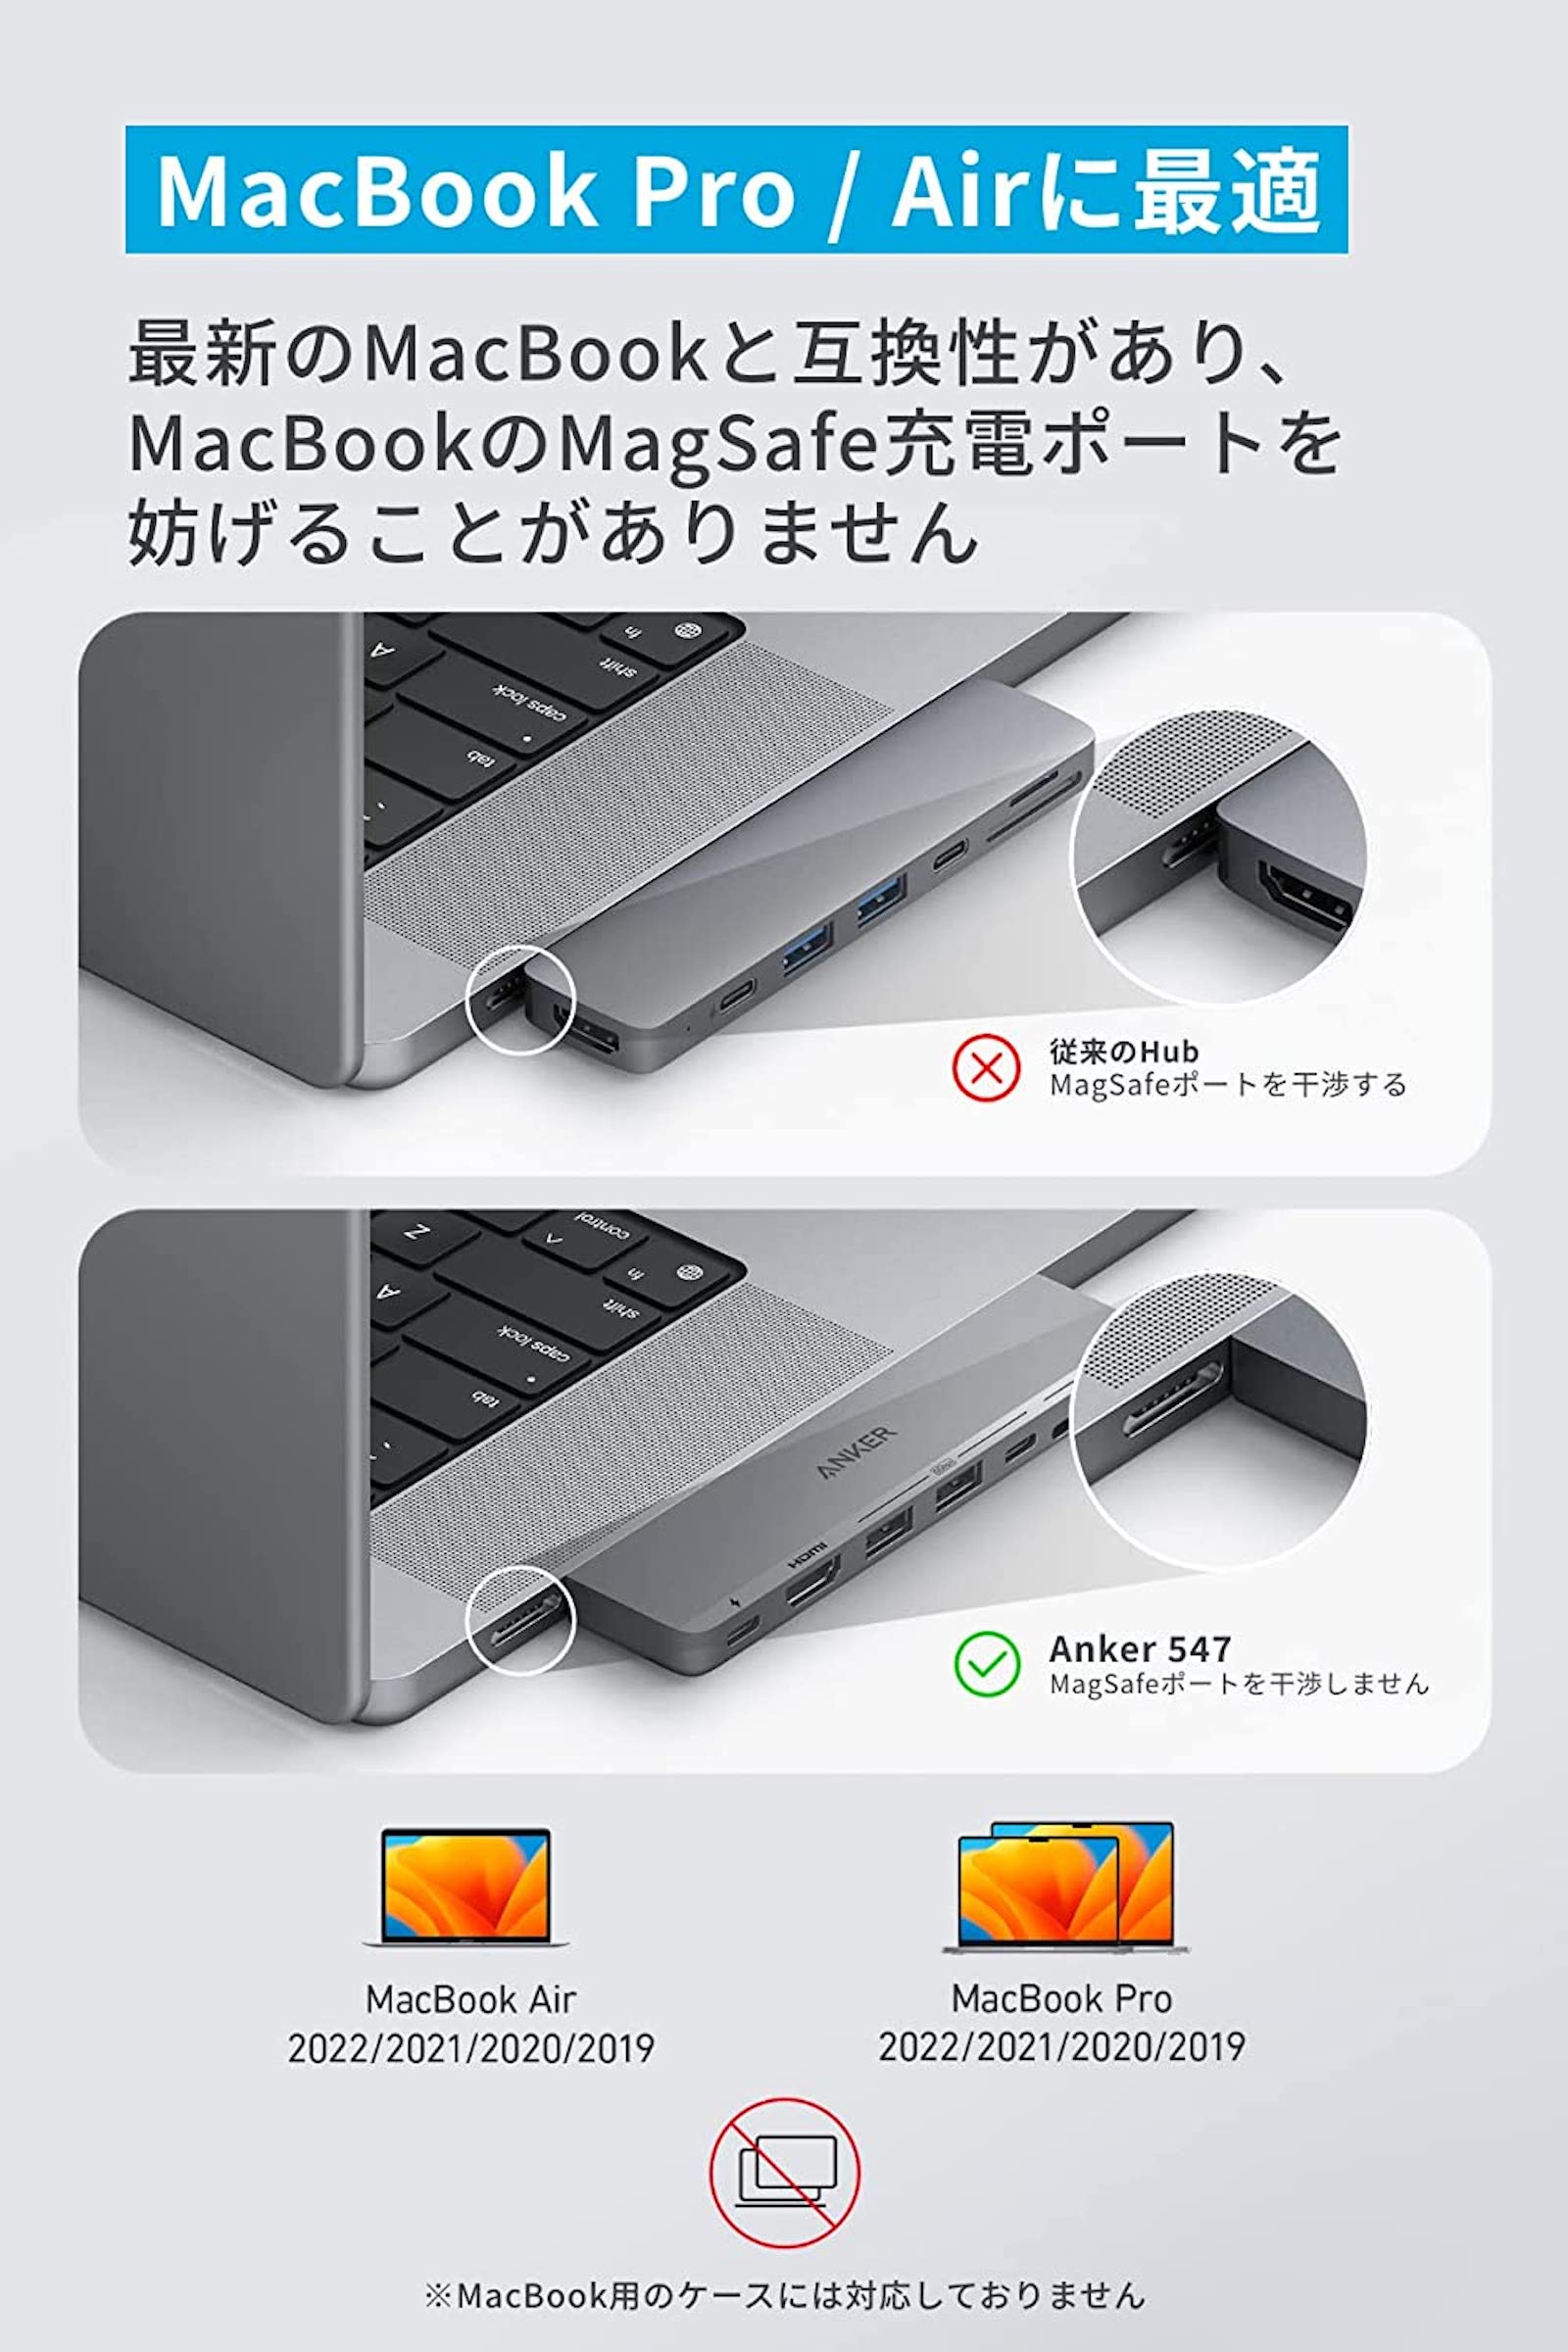 Compatible macs for anker 547